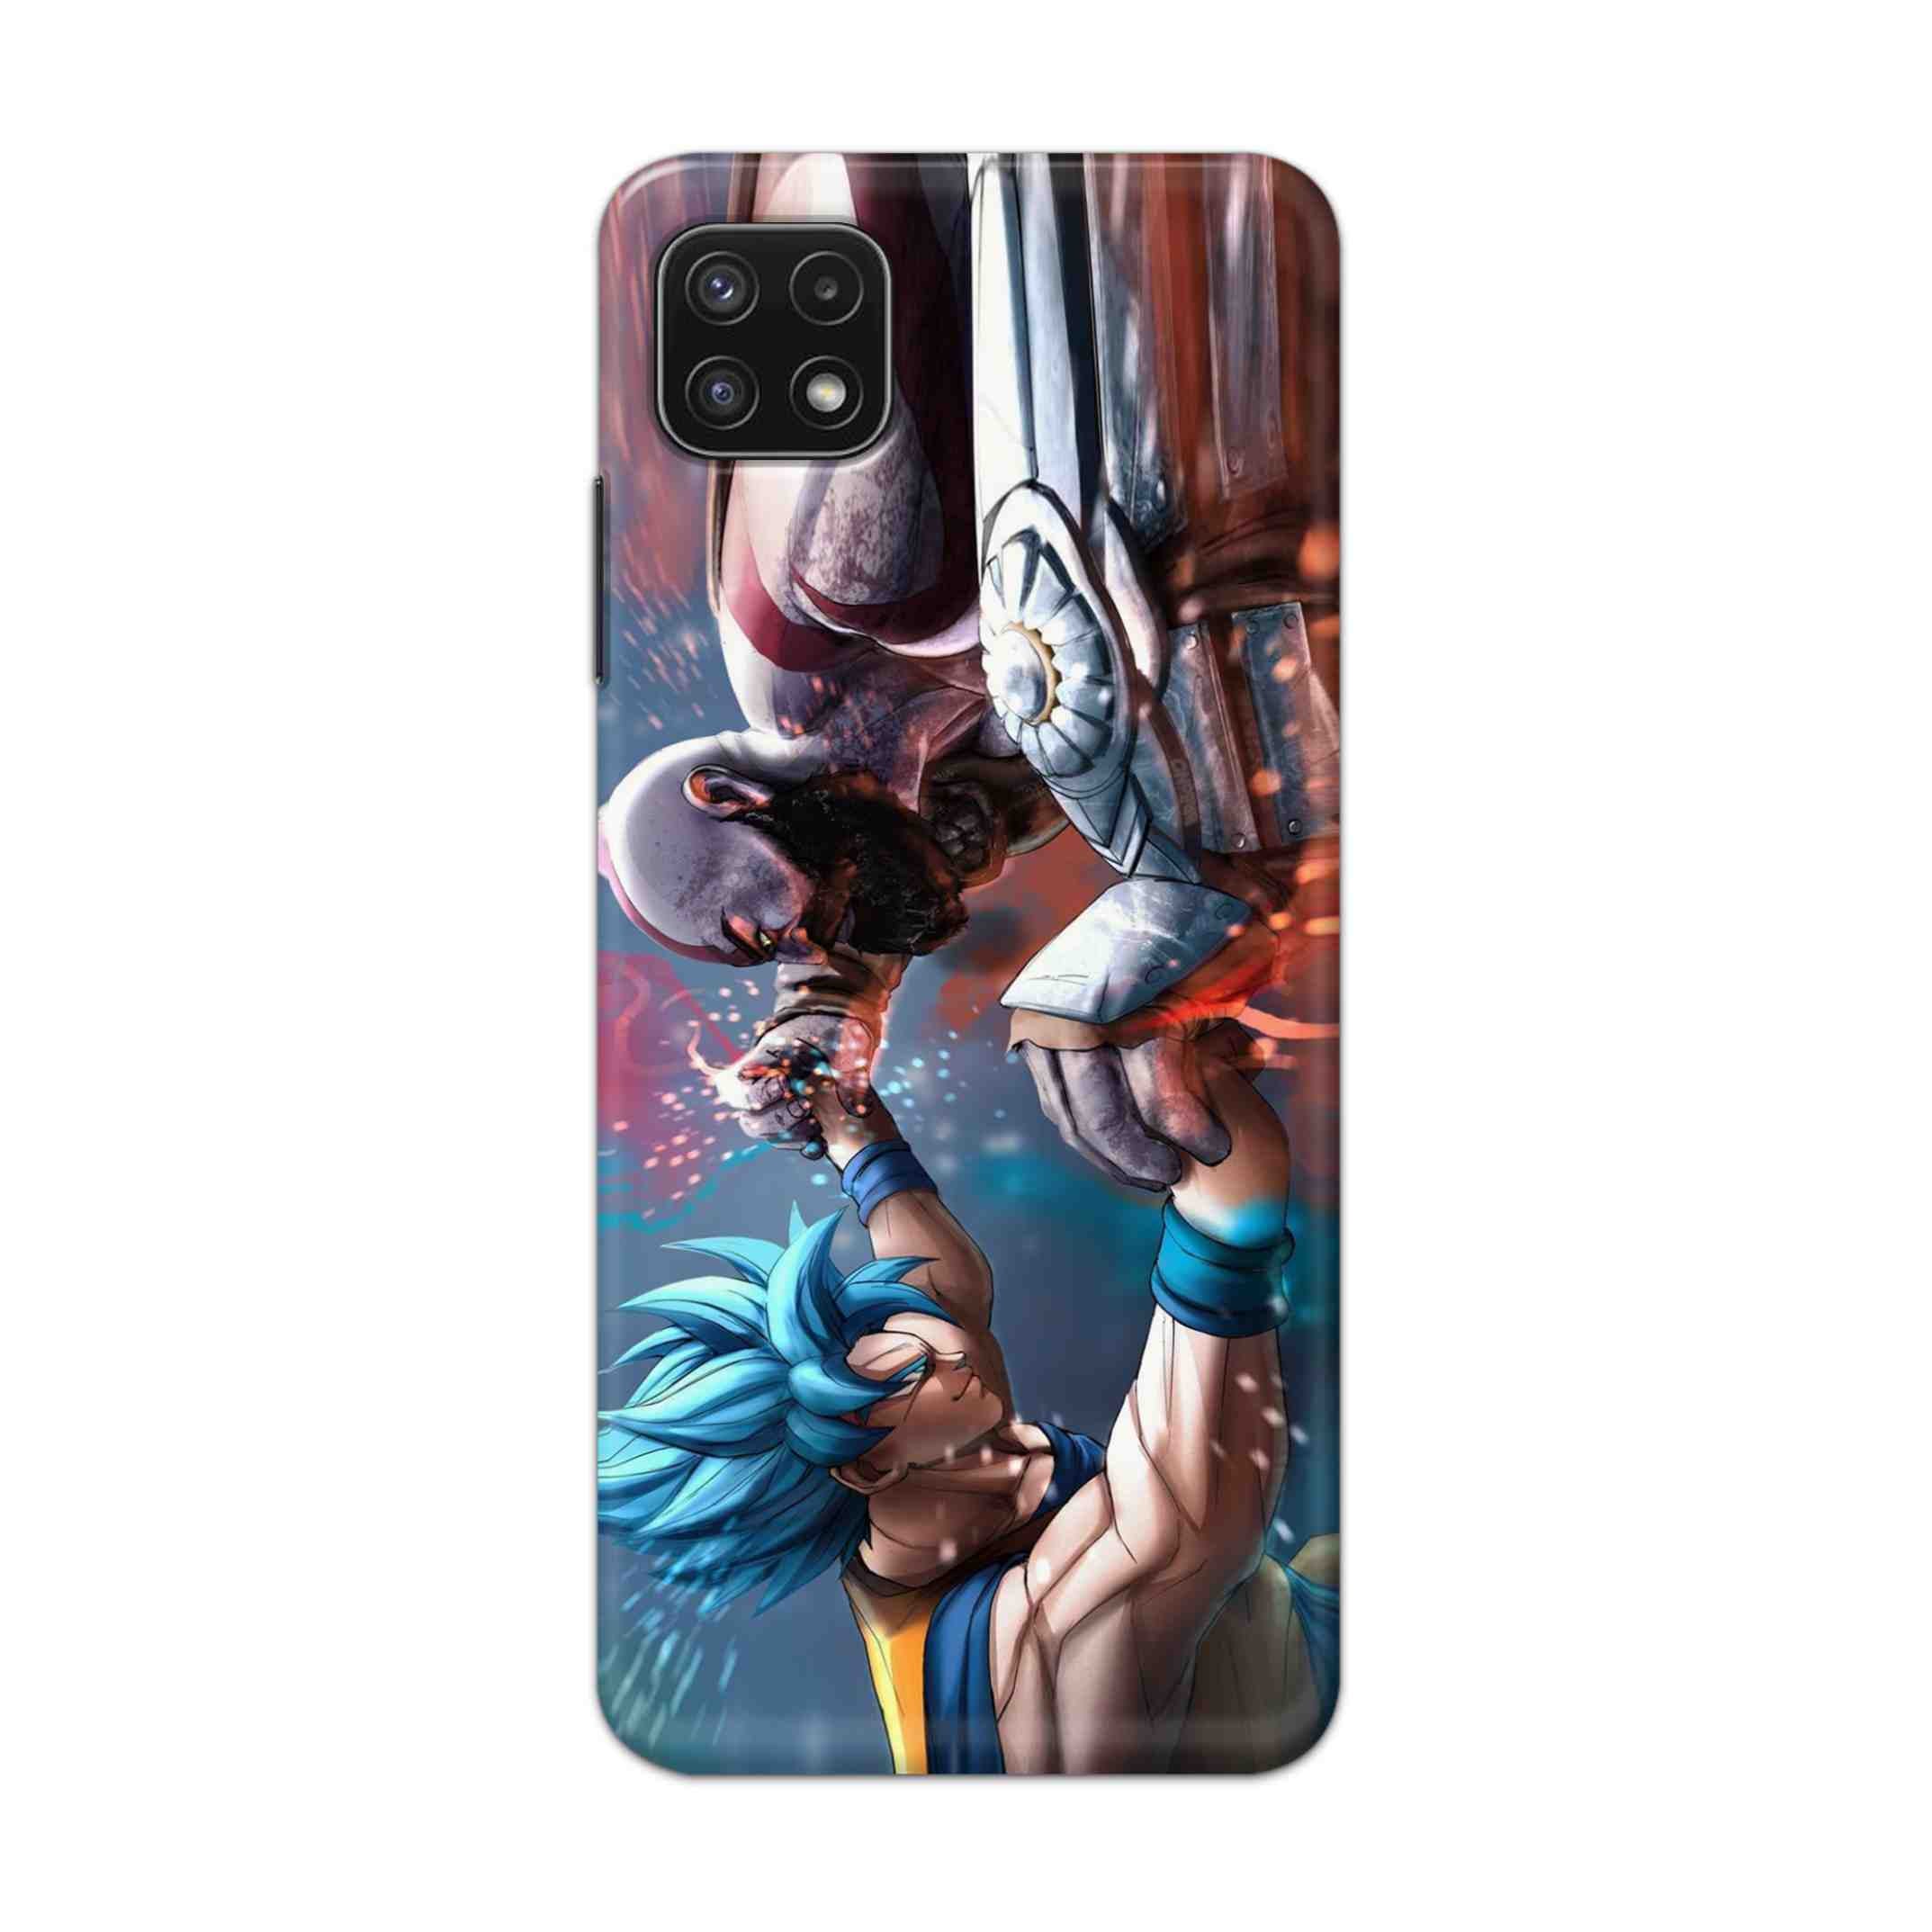 Buy Goku Vs Kratos Hard Back Mobile Phone Case Cover For Samsung A22 5G Online